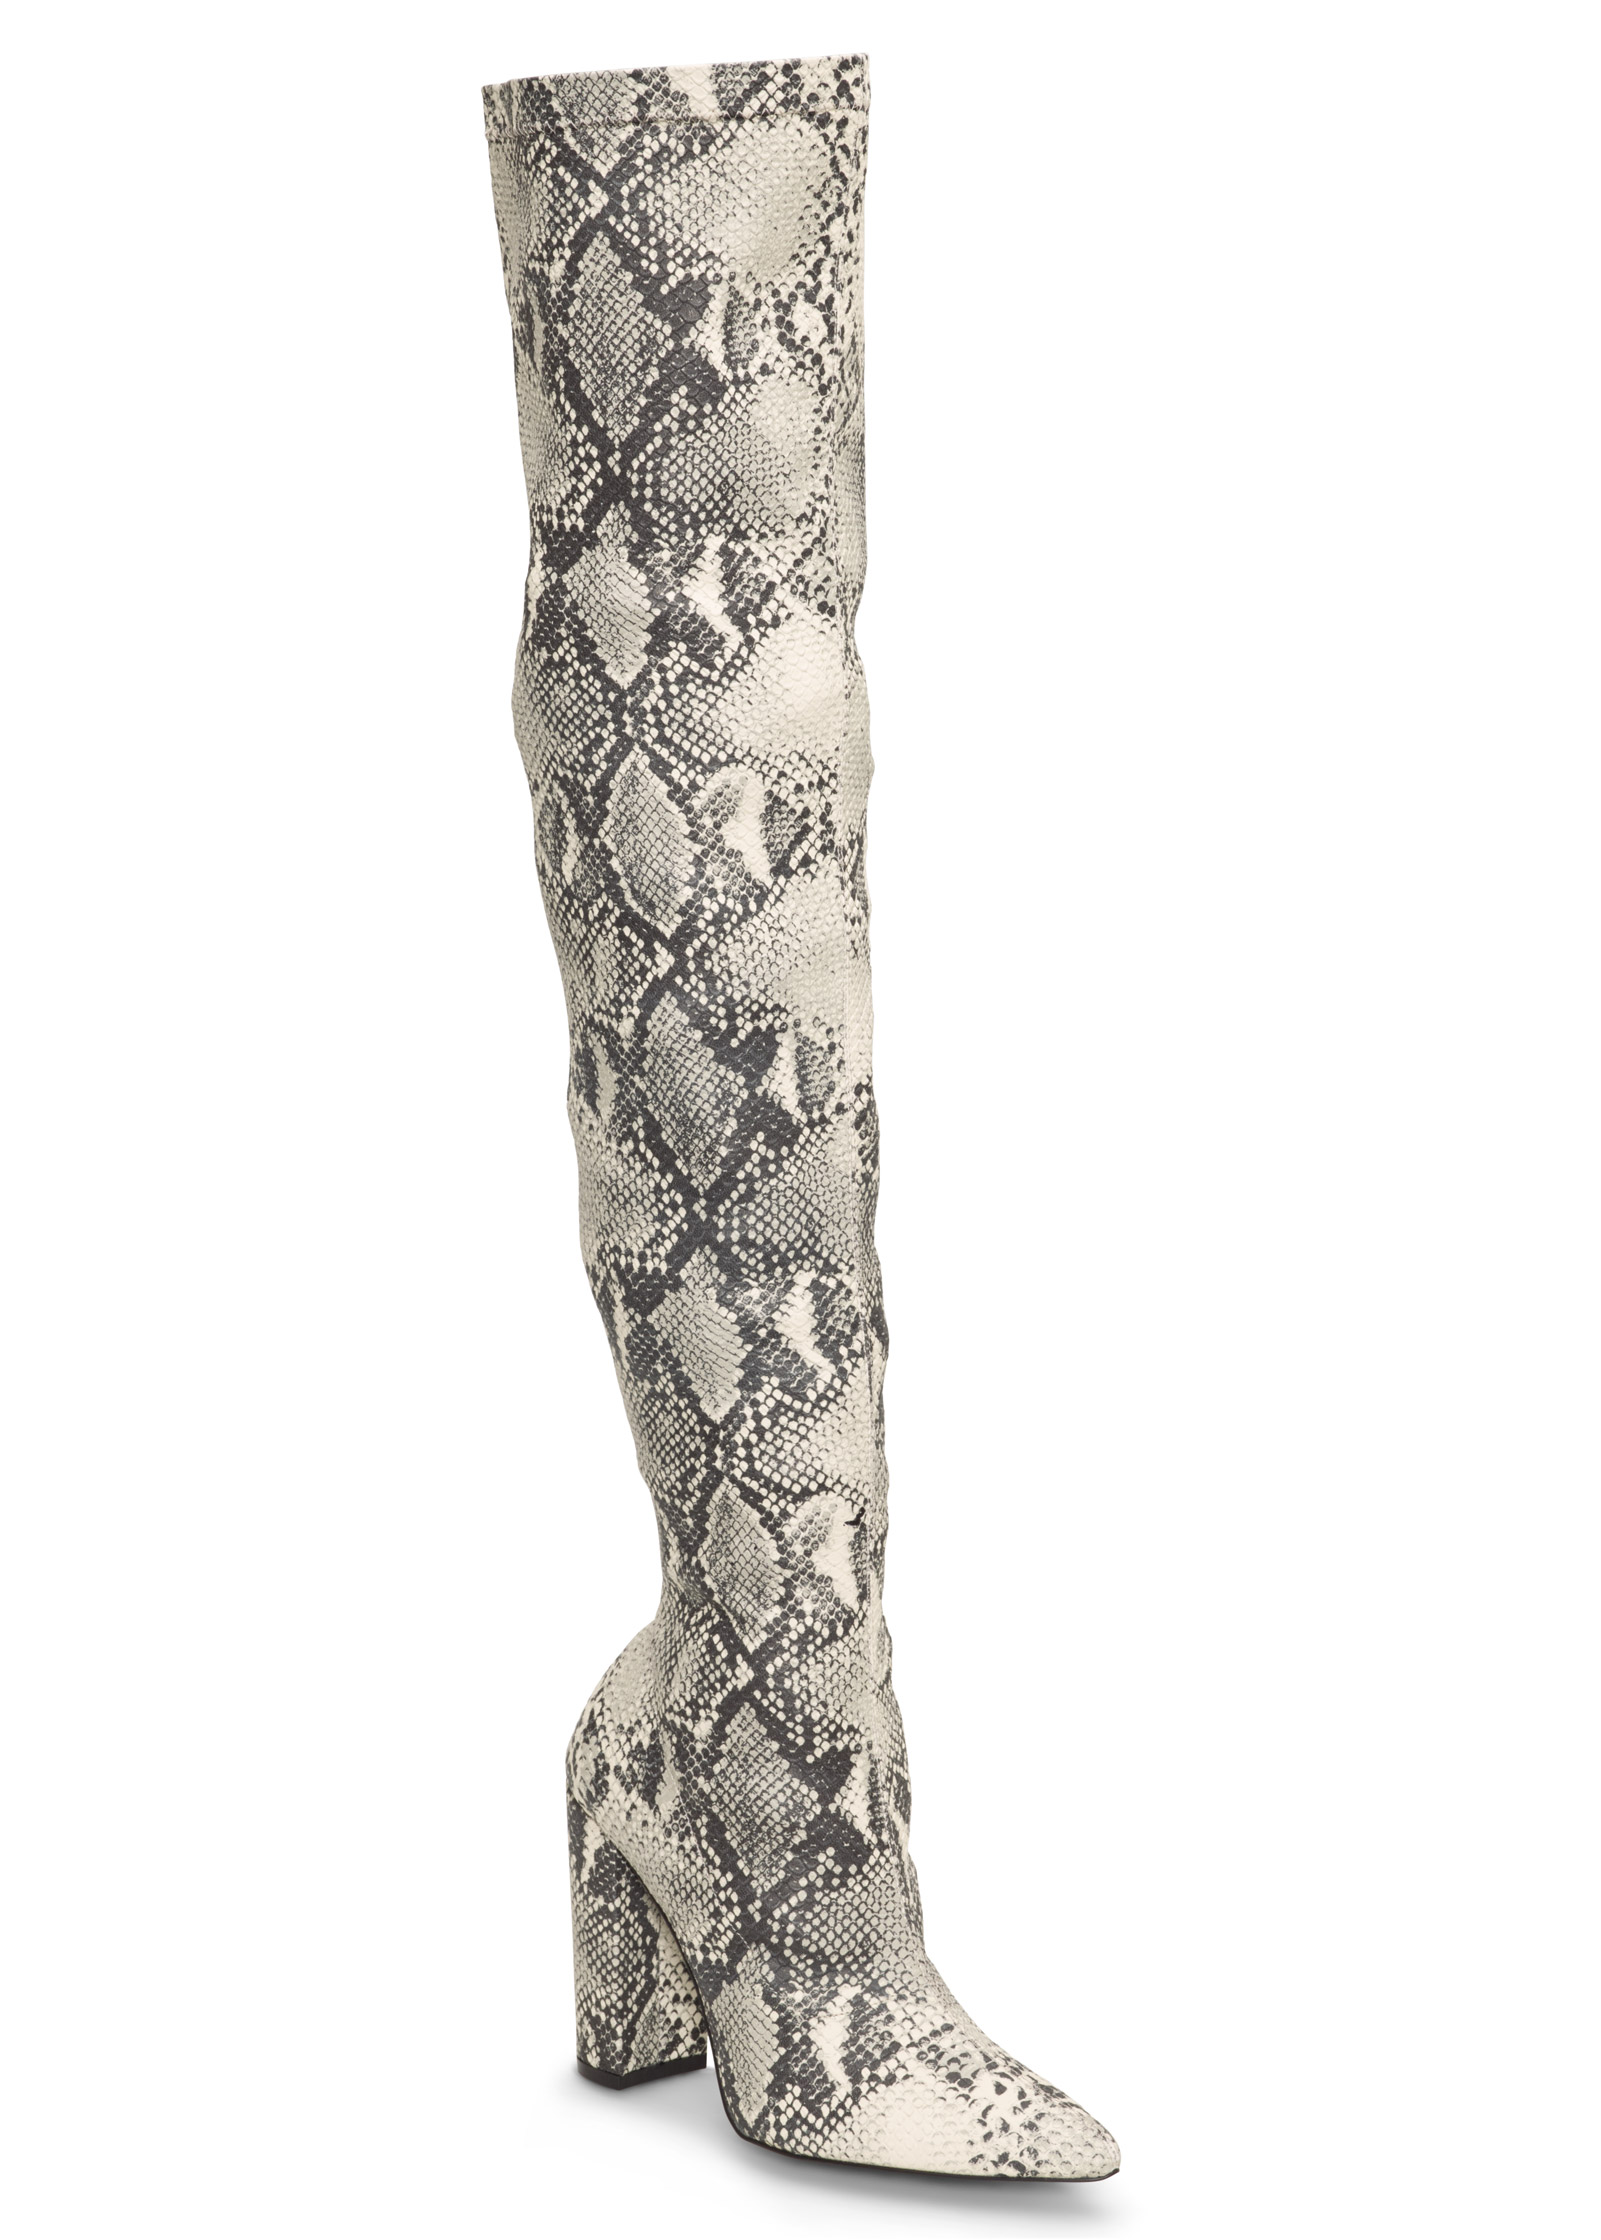 Animal Print Boots in Grey Multi | VENUS